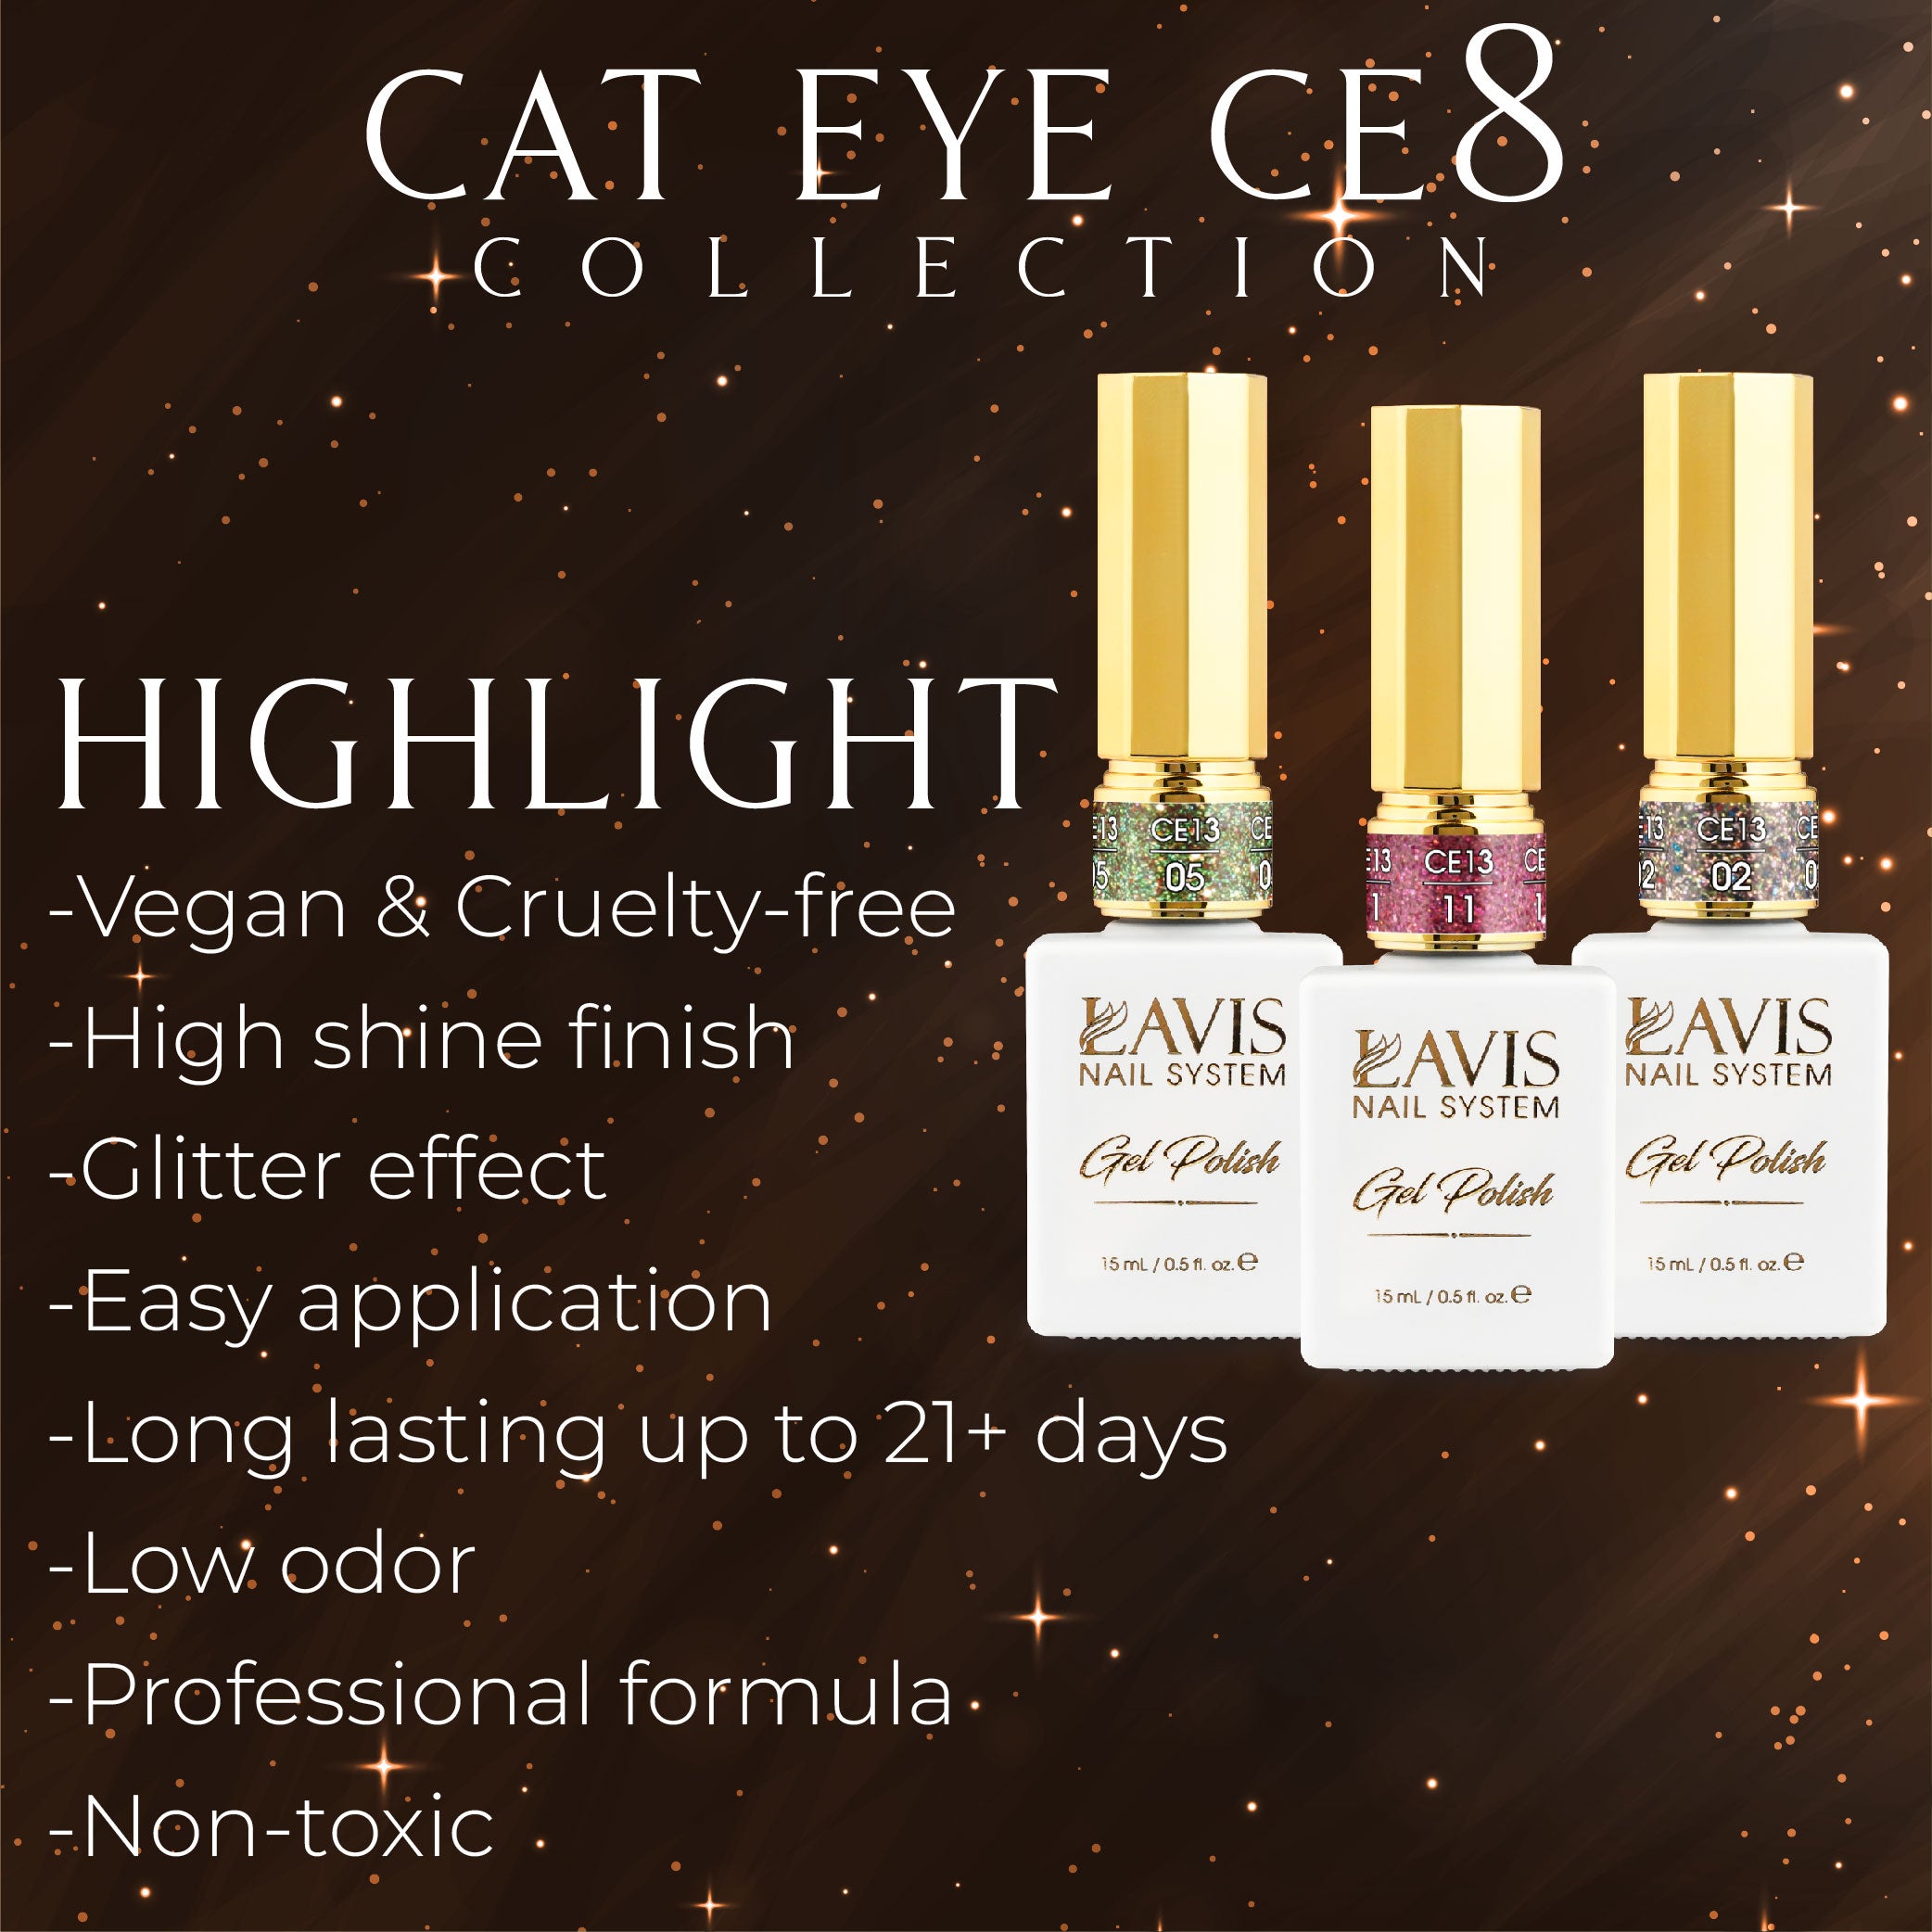 LAVIS Cat Eyes CE8 - 04 - Gel Polish 0.5 oz - Lavis Hidden Treasures Collection